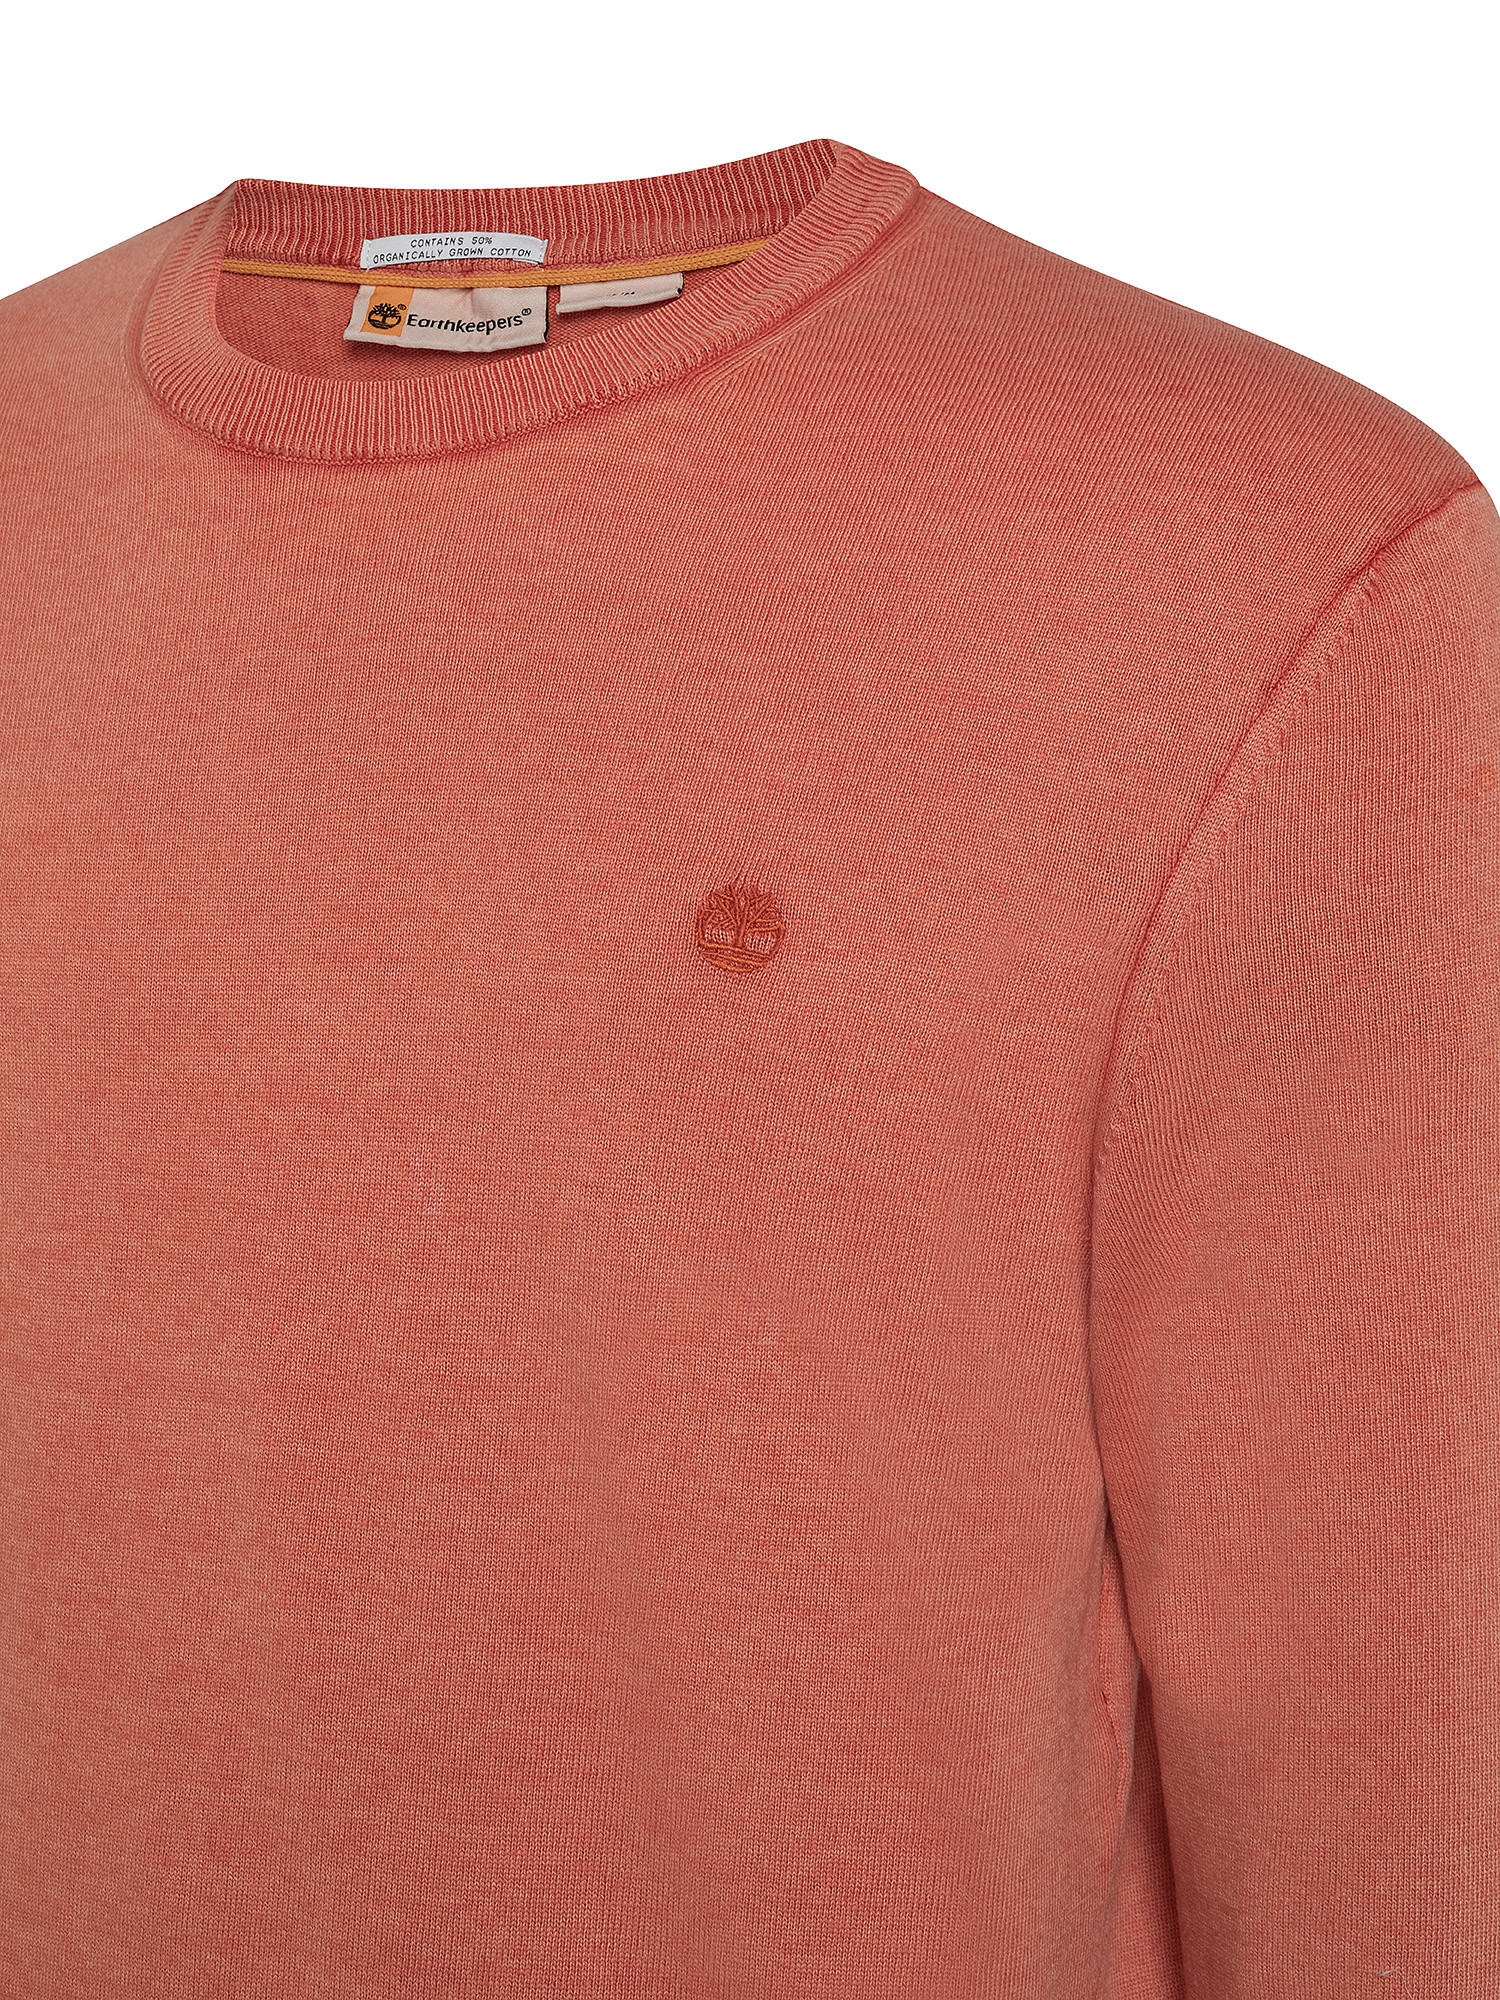 EK + Men's Lightweight Sweater, Orange, large image number 2